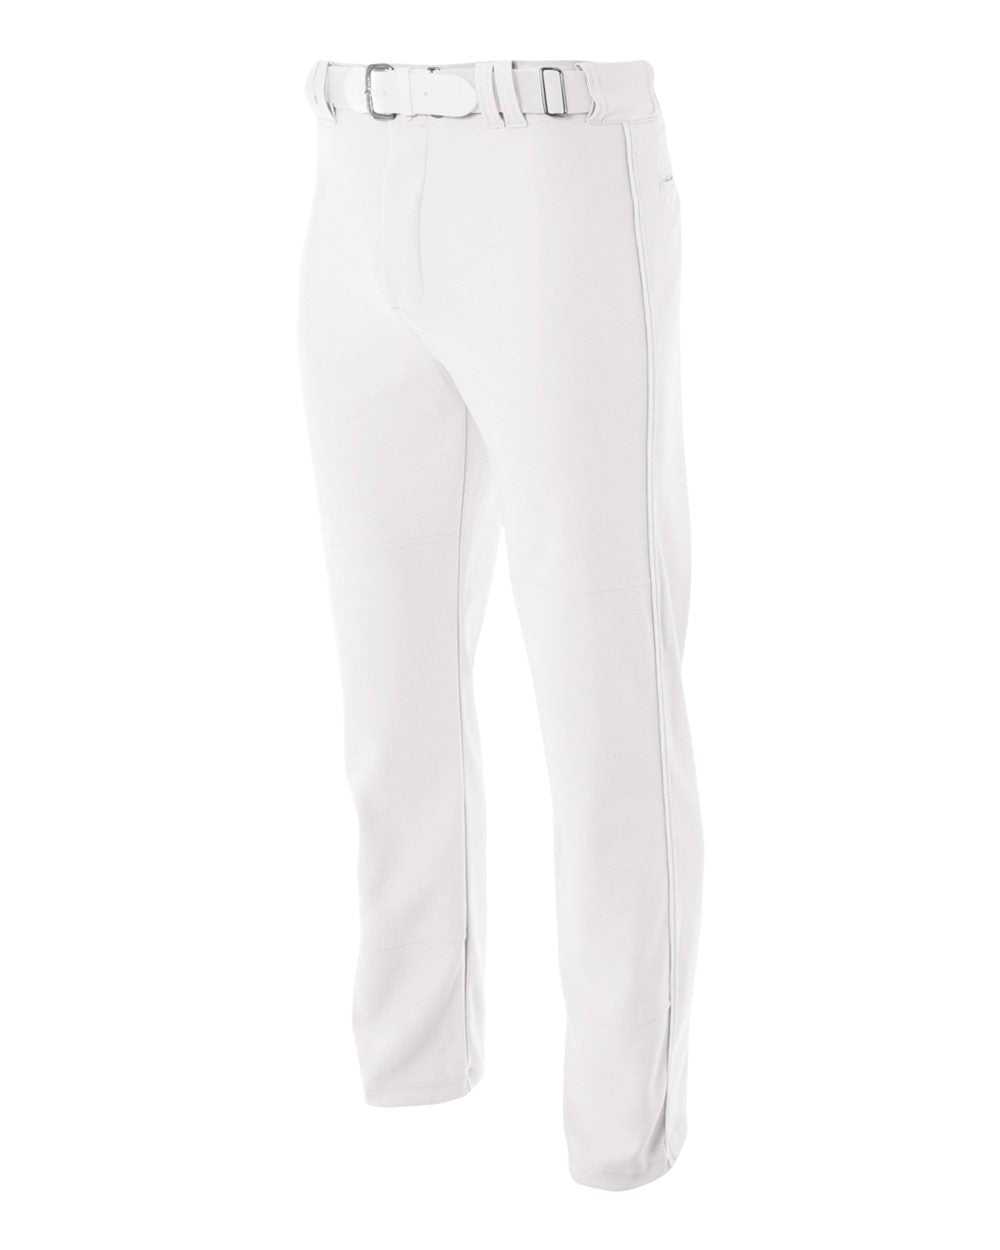 A4 N6162 Pro Style Open Bottom Baggy Cut Baseball Pant - White - HIT a Double